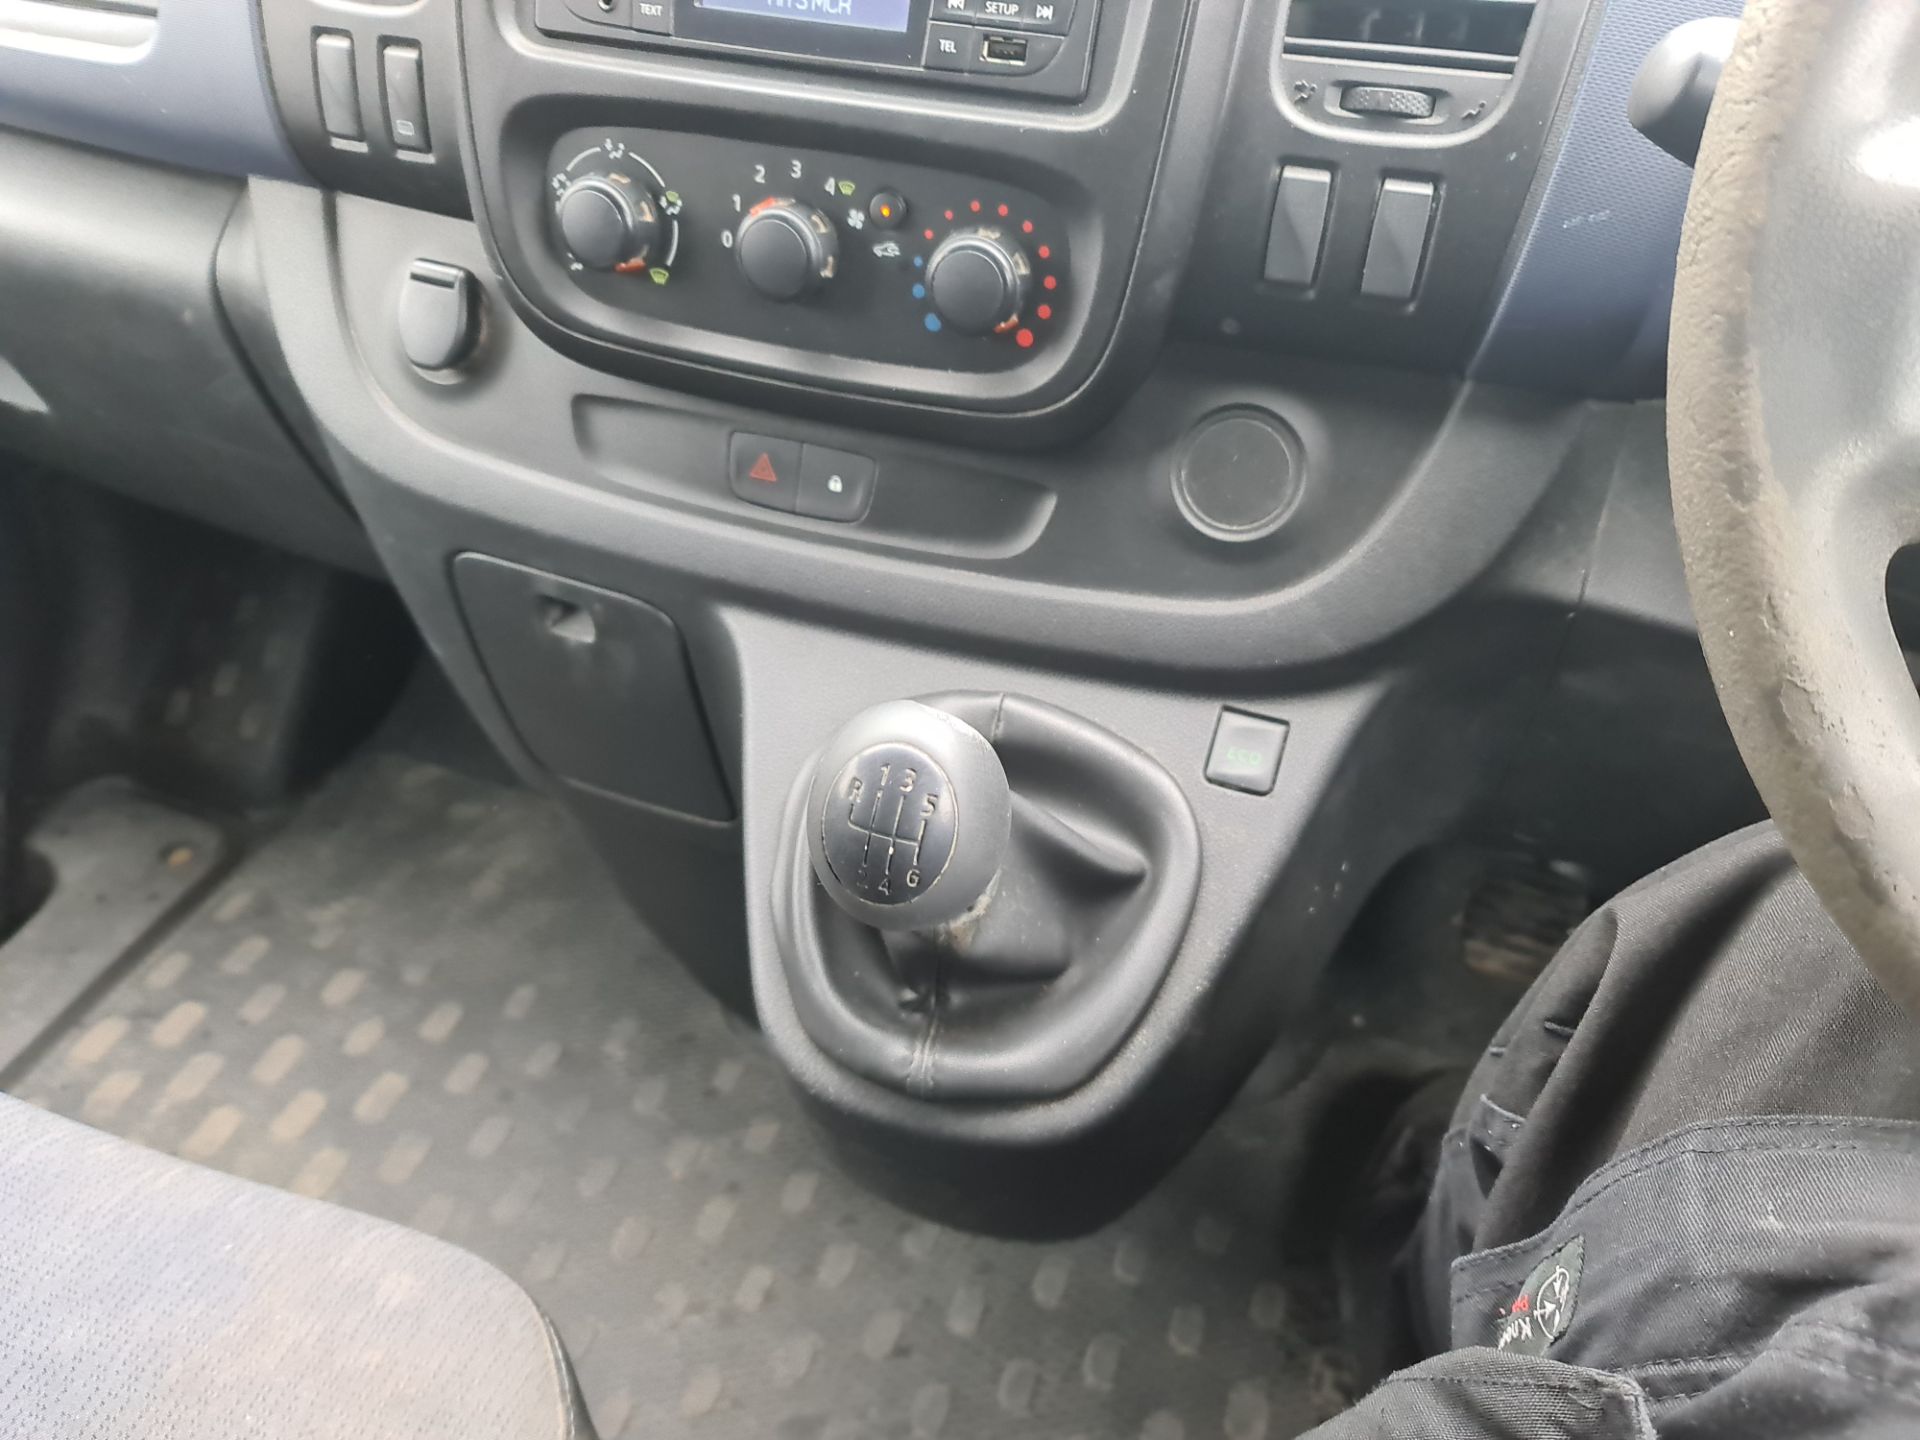 2015 Vauxhall Vivaro 2900 CDTi panel van - Image 53 of 66